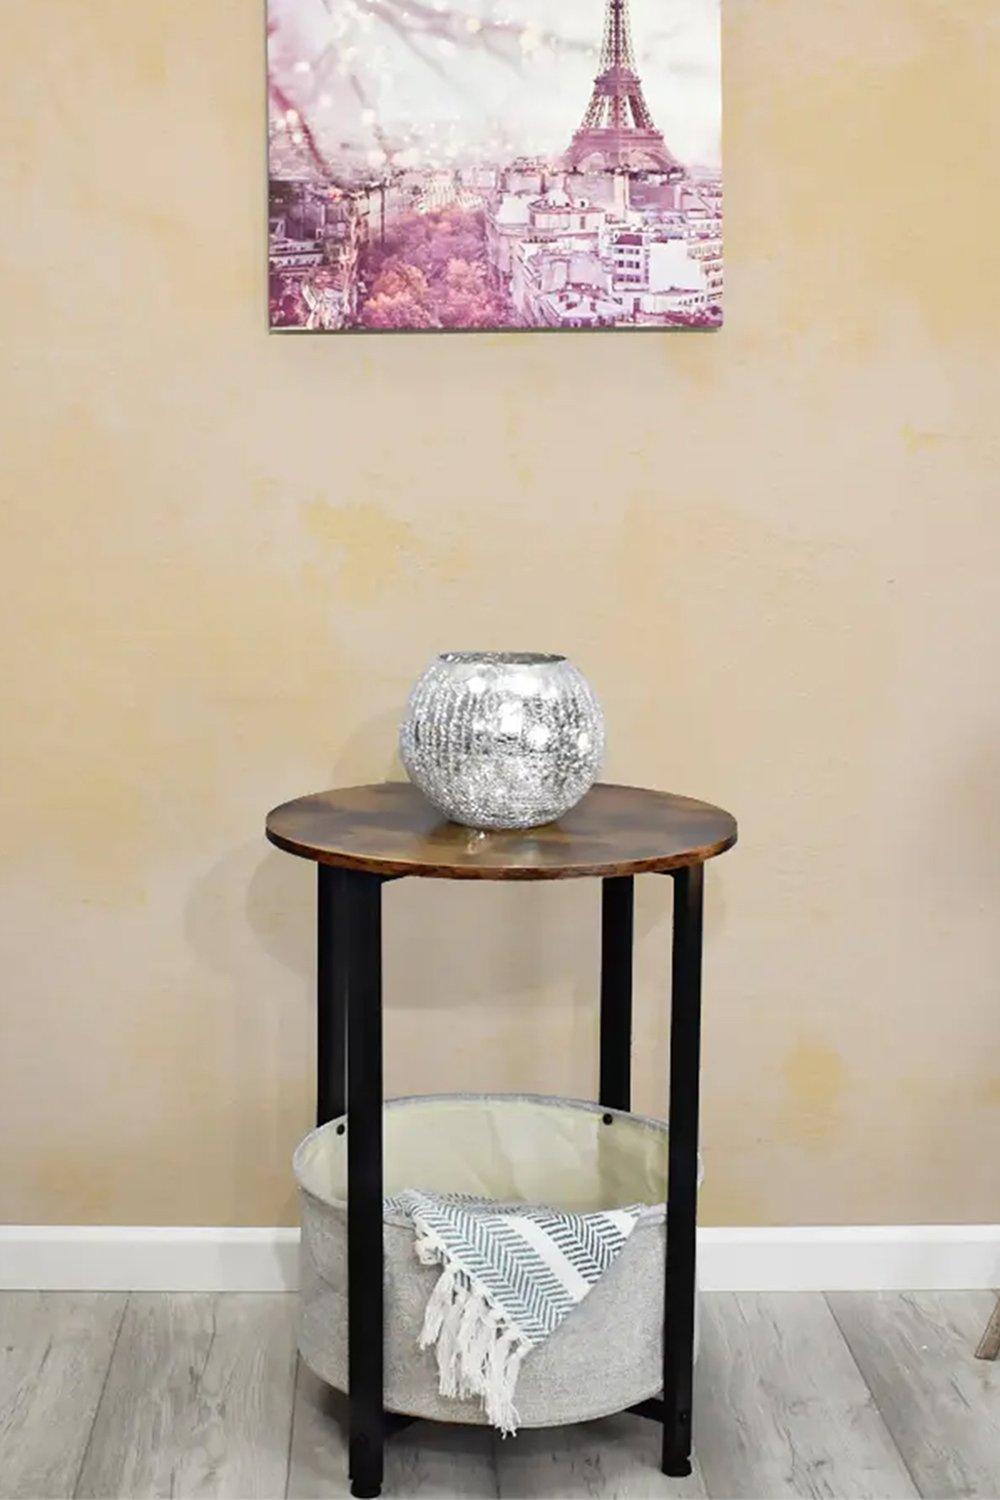 Walnut Effect Coffee/Side Table With Basket